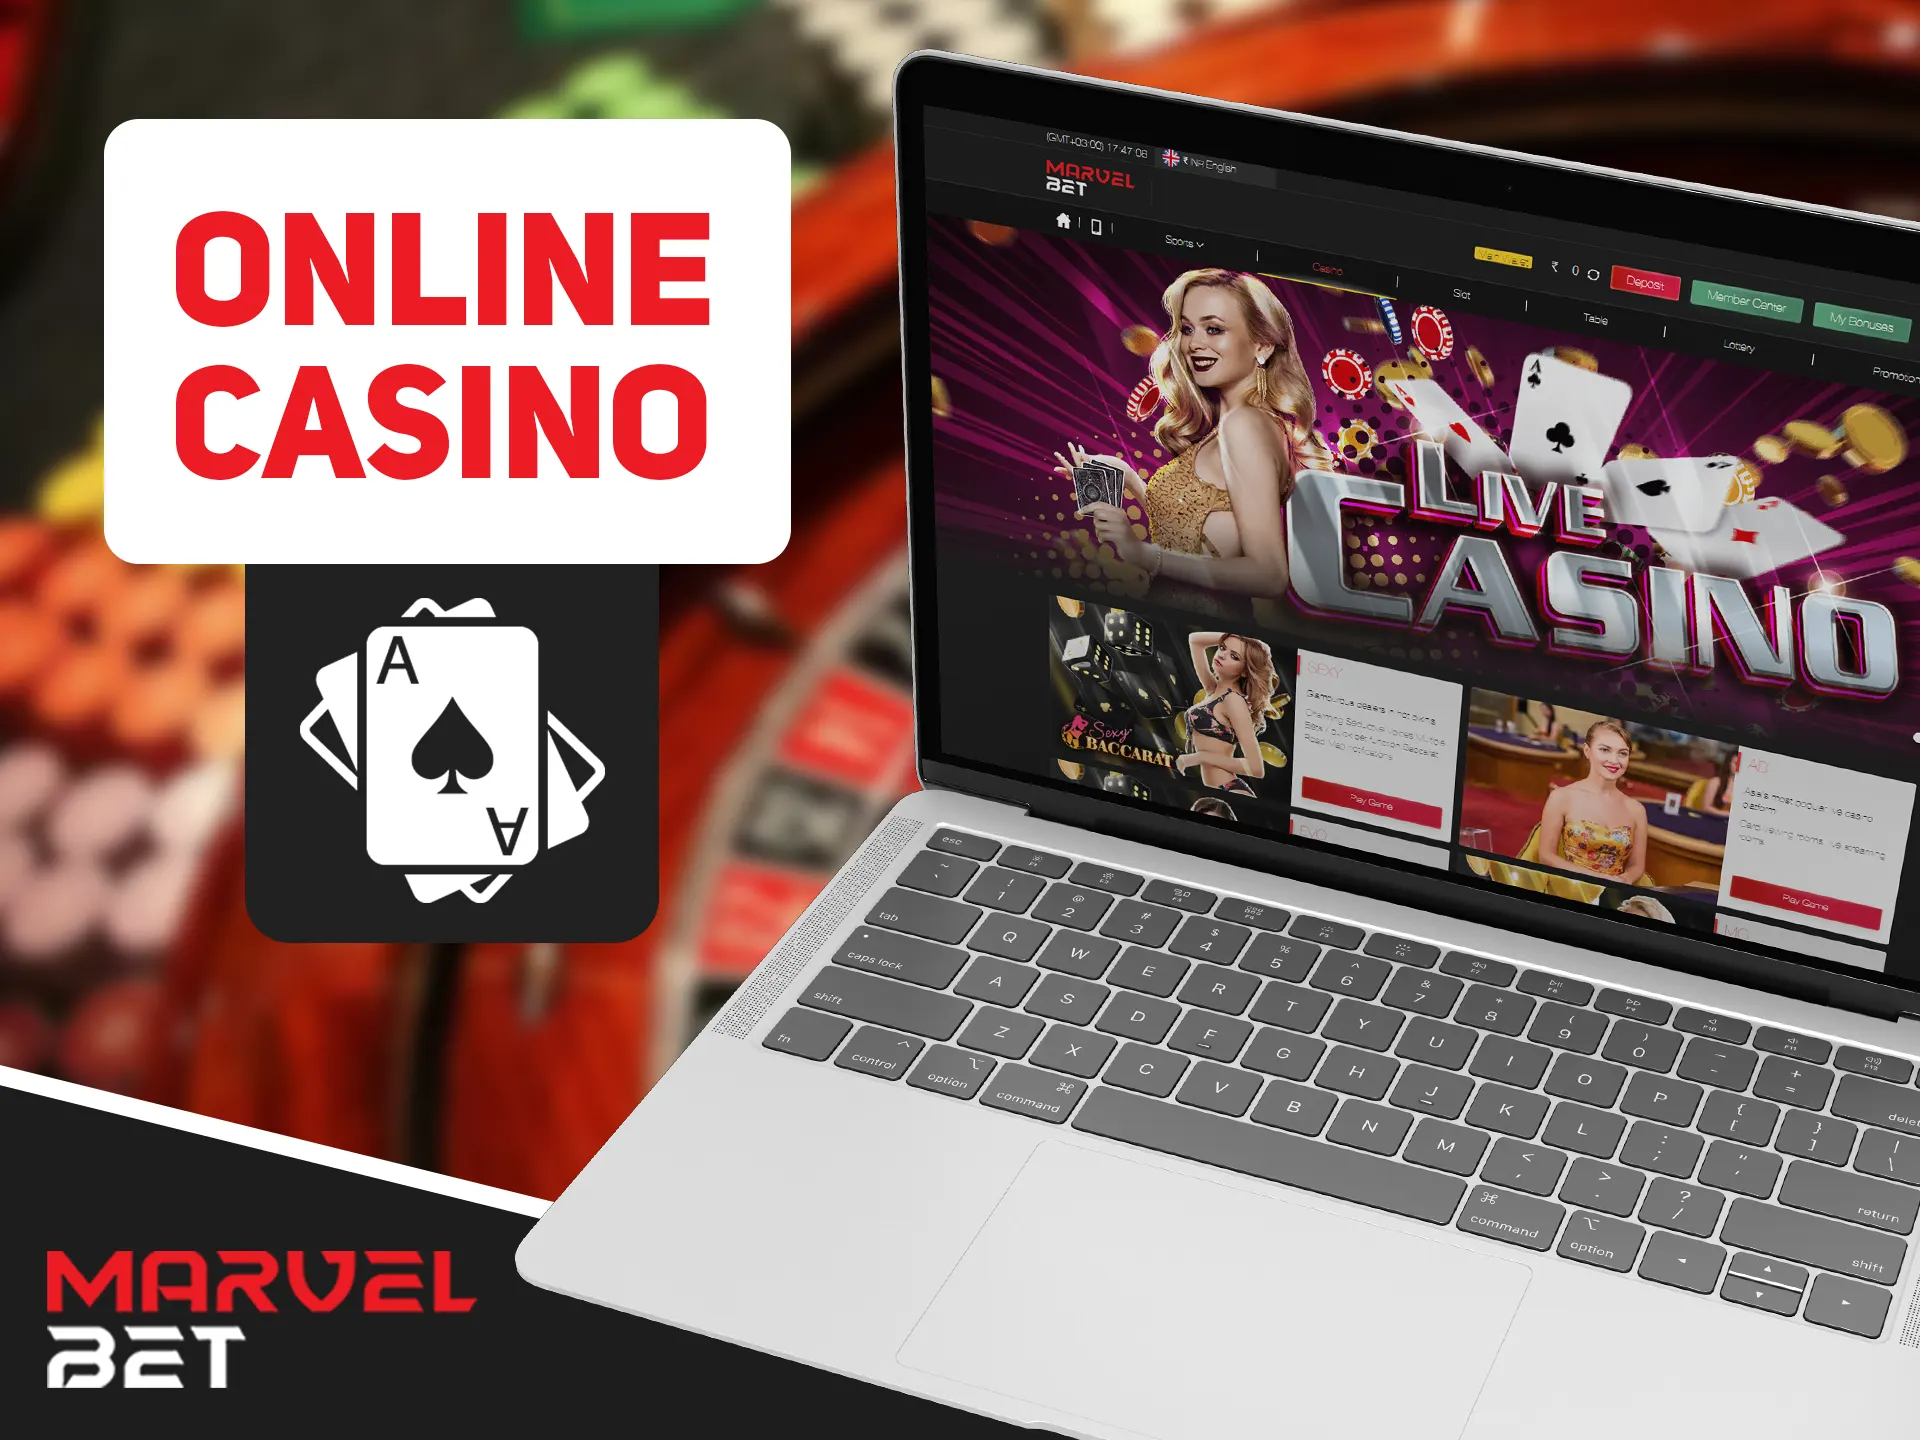 Marvelbet casino provides wide variety of casino games.